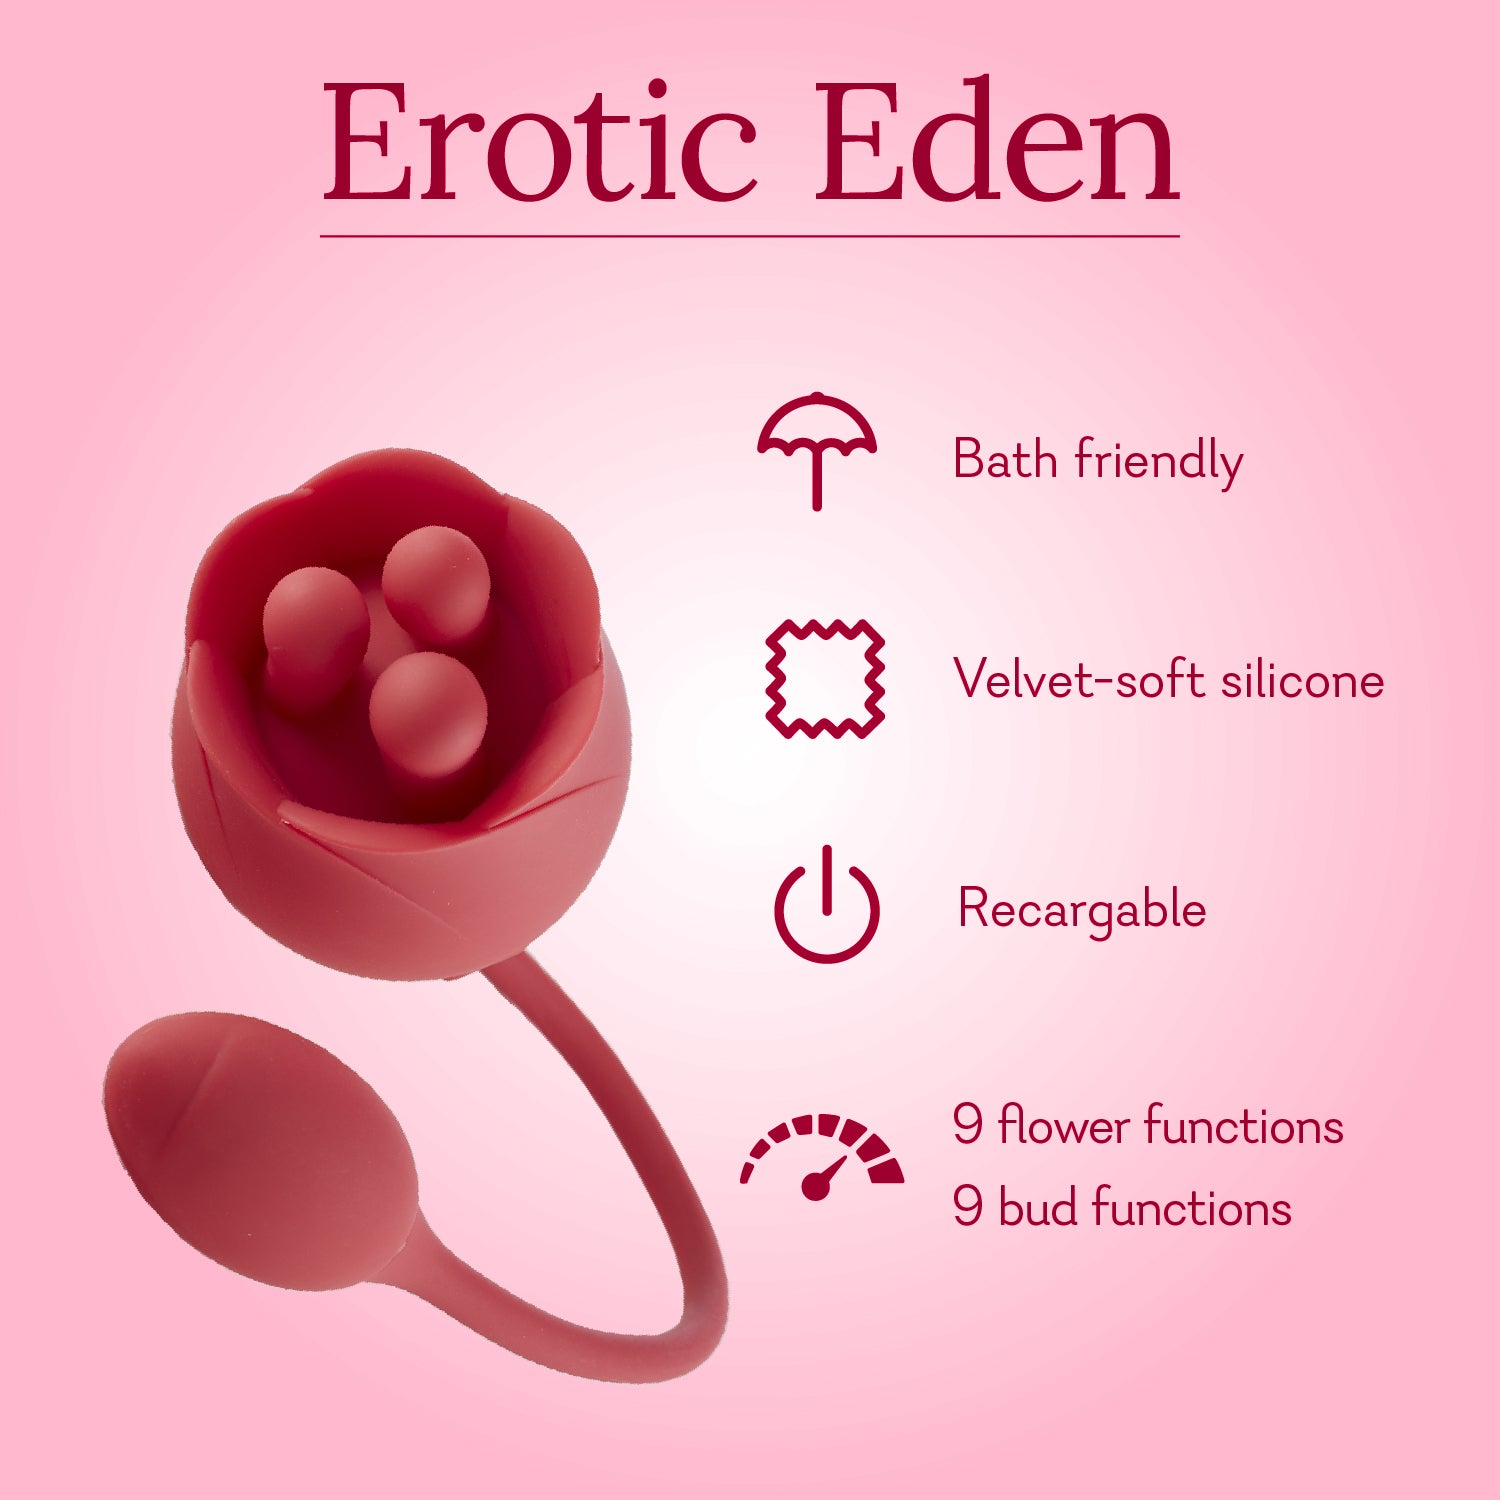 Erotic Eden Rose Vibrator Infographic 2 Pure Romance